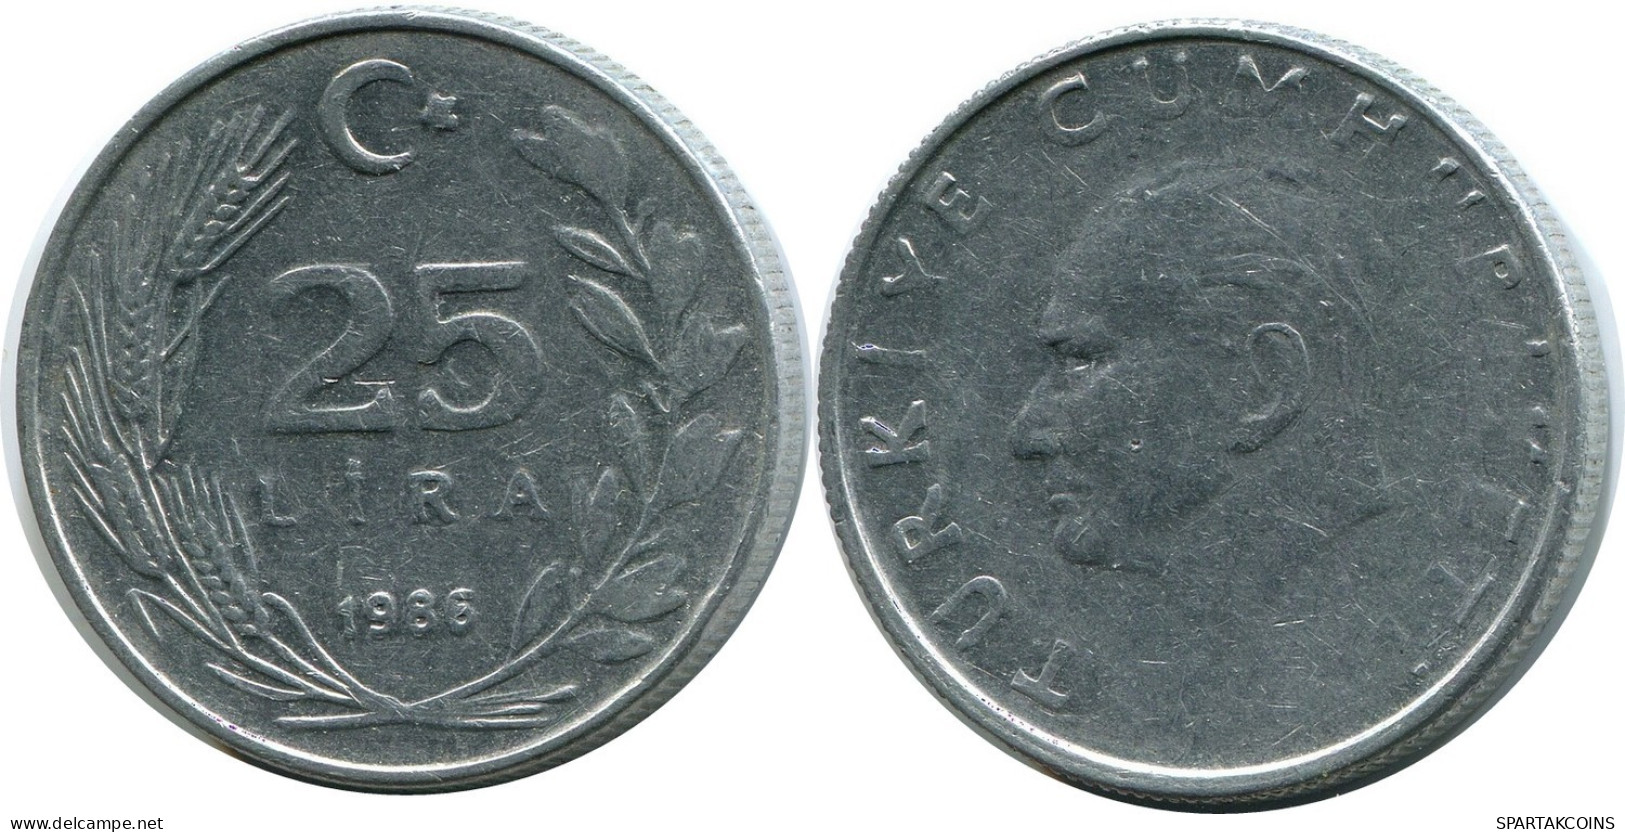 25 LIRA 1986 TURQUIA TURKEY Moneda #AR247.E.A - Türkei